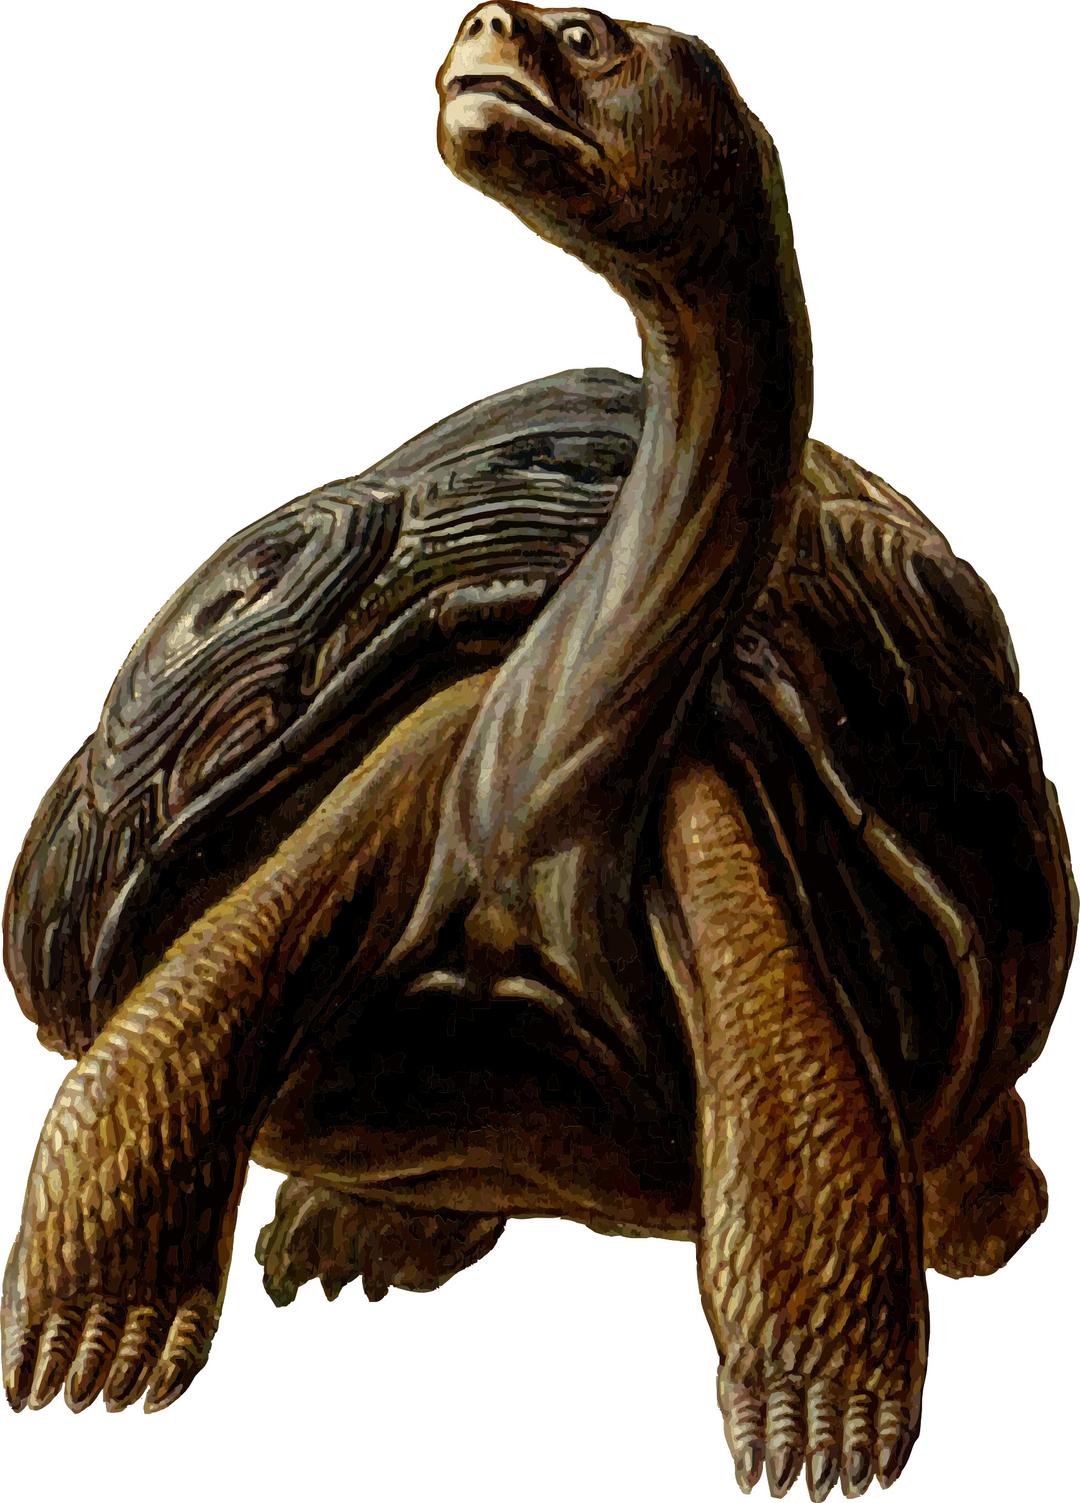 Prehistoric Tortoise Clipart png transparent